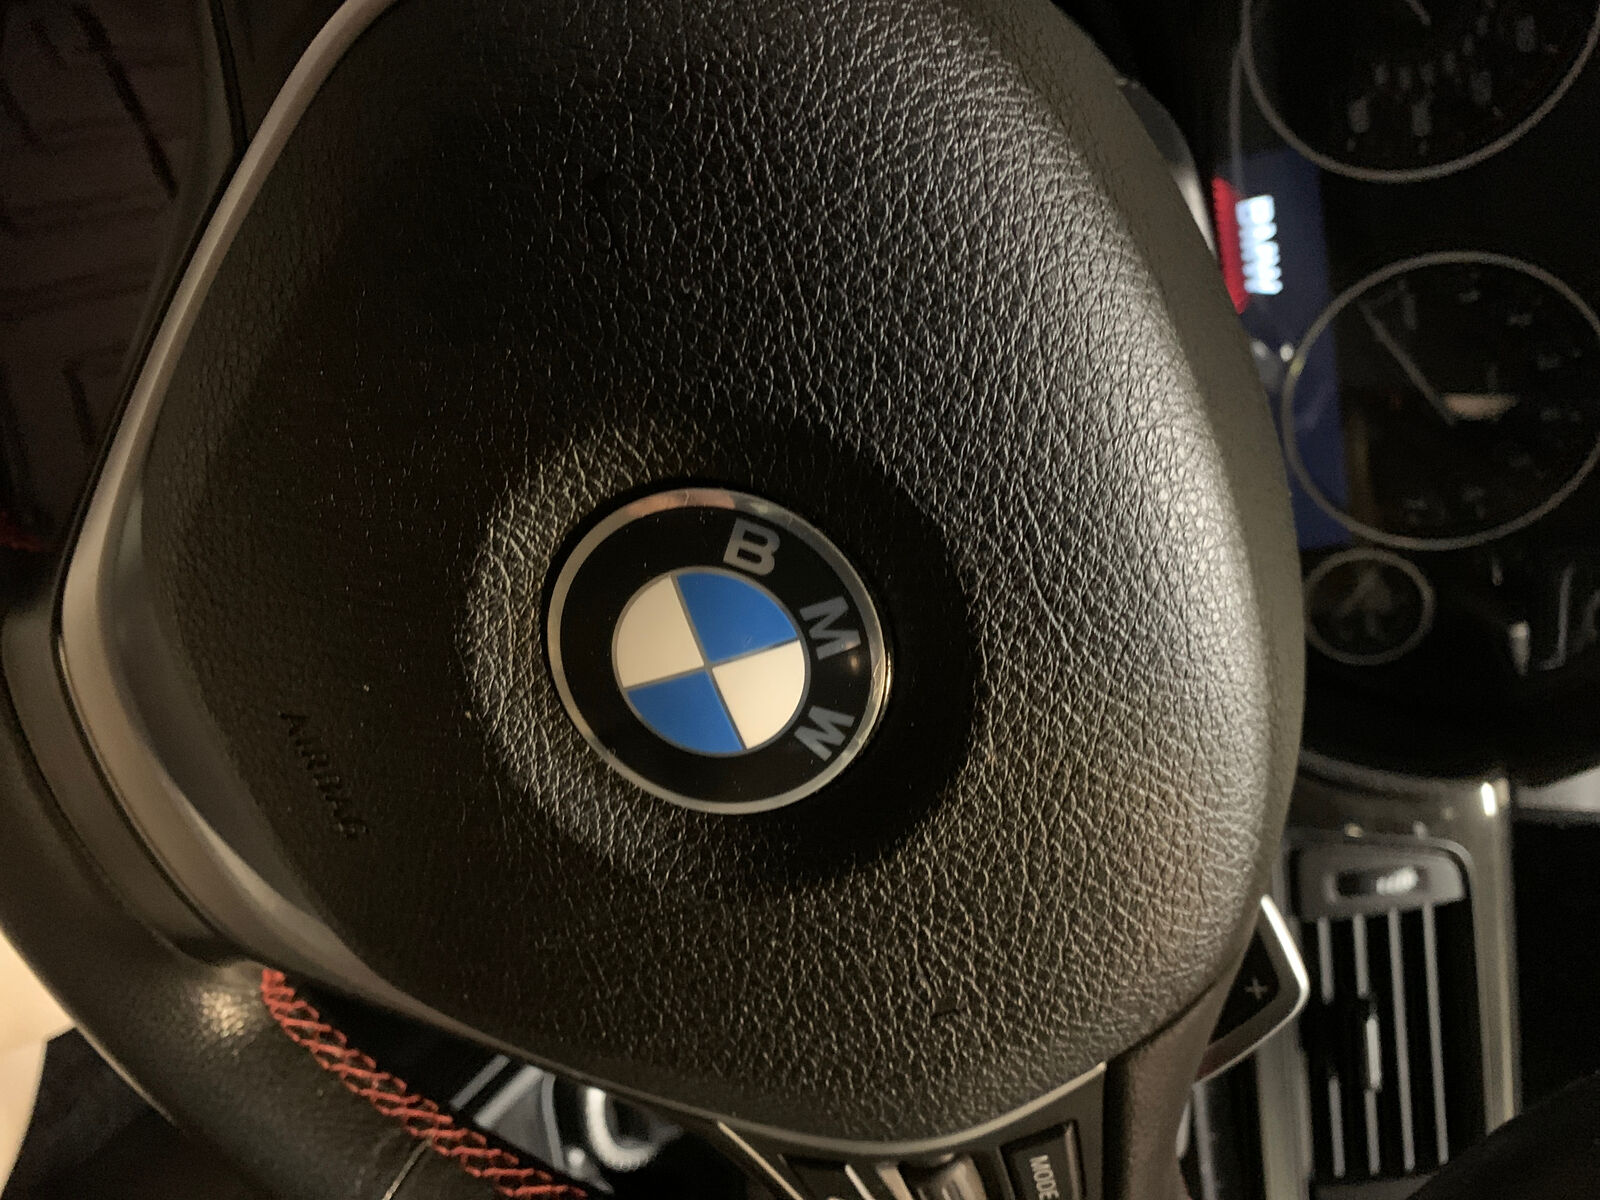 BLINGOOSE für BMW Zubehör Lenkrad Emblem Aufkleber BMW 3 5 6er X1